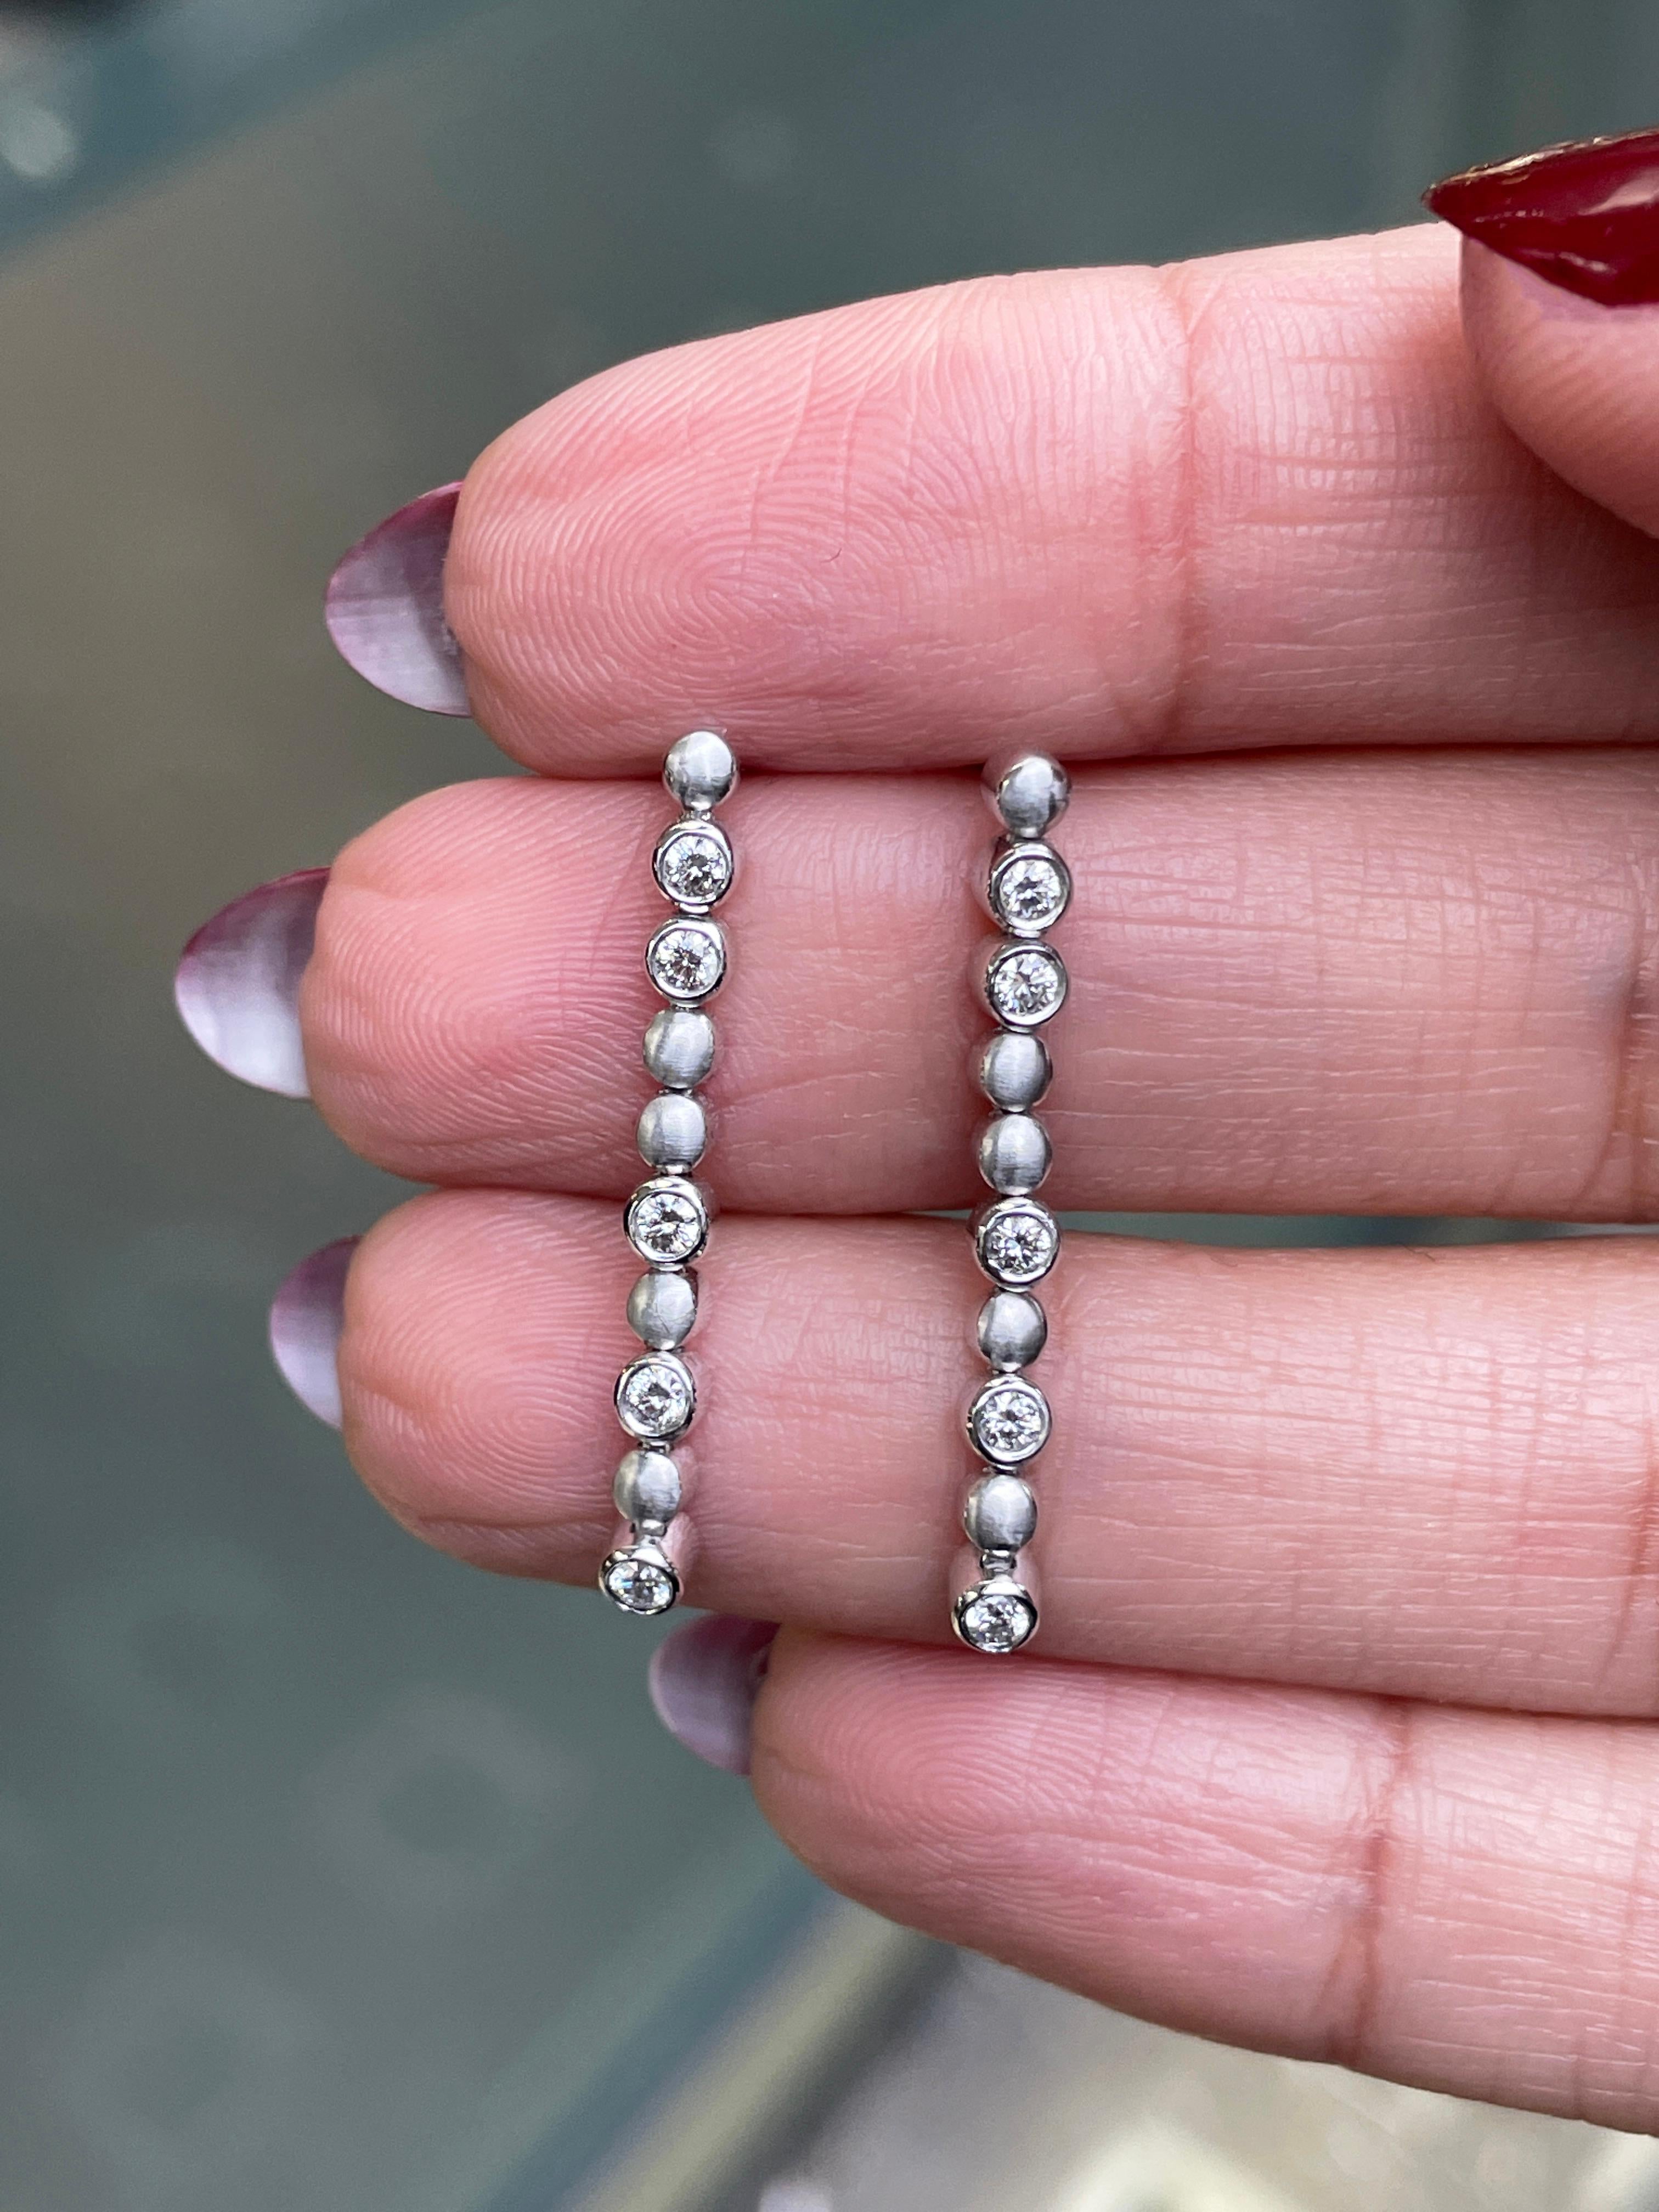 pearl drop earrings white gold -china -b2b -forum -blog -wikipedia -.cn -.gov -alibaba